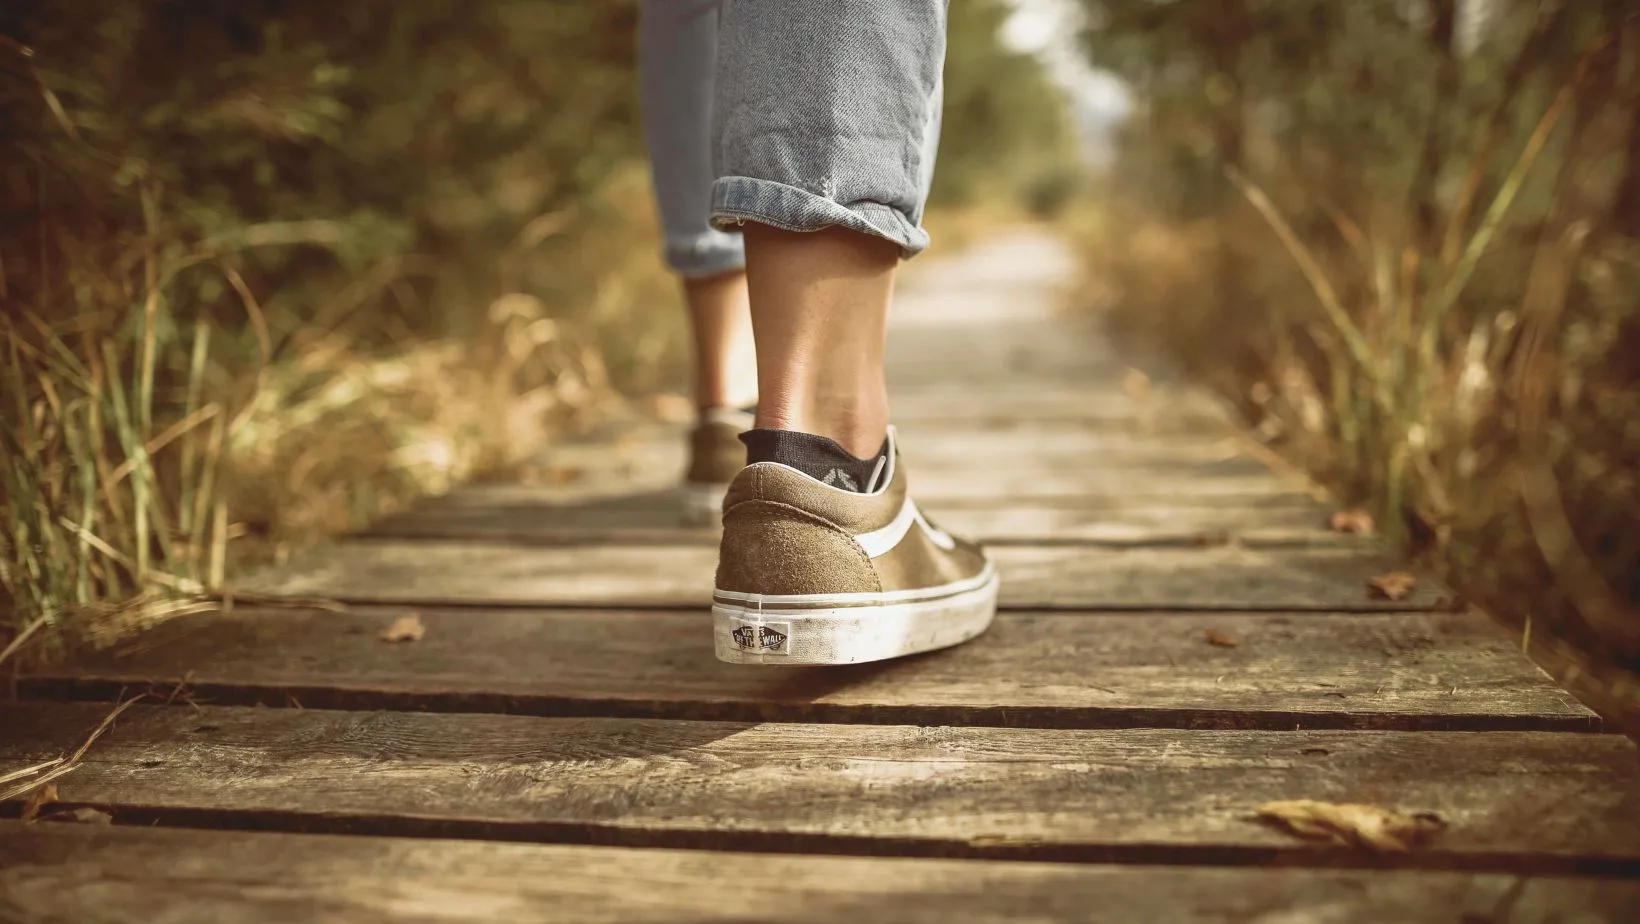 Walking- Exercises to improve mental health